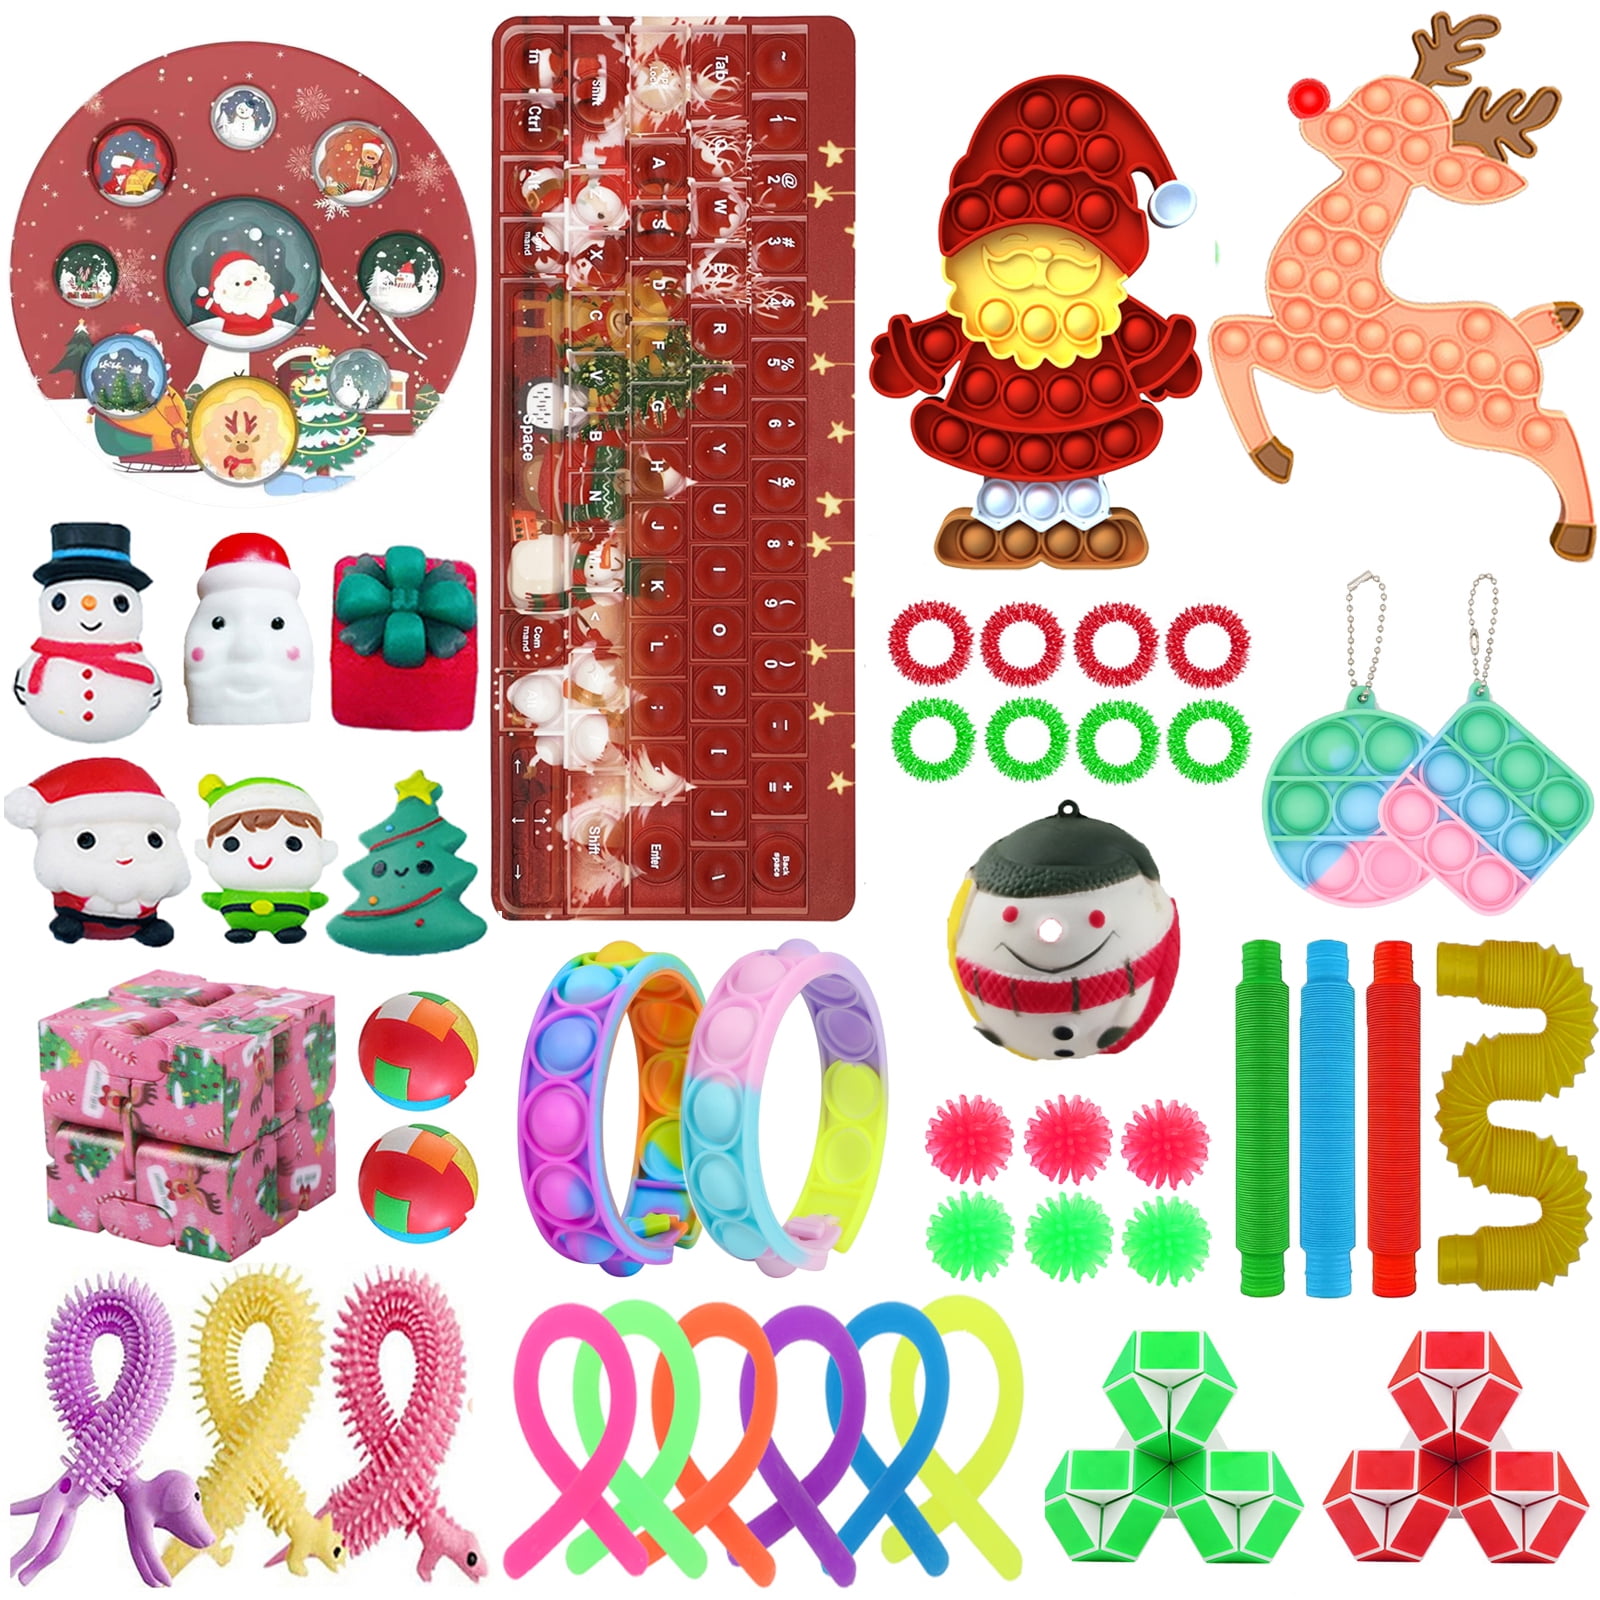 Xmas Fidget Pack-2 Auciho Fidget Toys Pack for Christmas Xmas Sensory Fidget Pack with Santa Claus Pop Stress Relief Toys Set for Kids